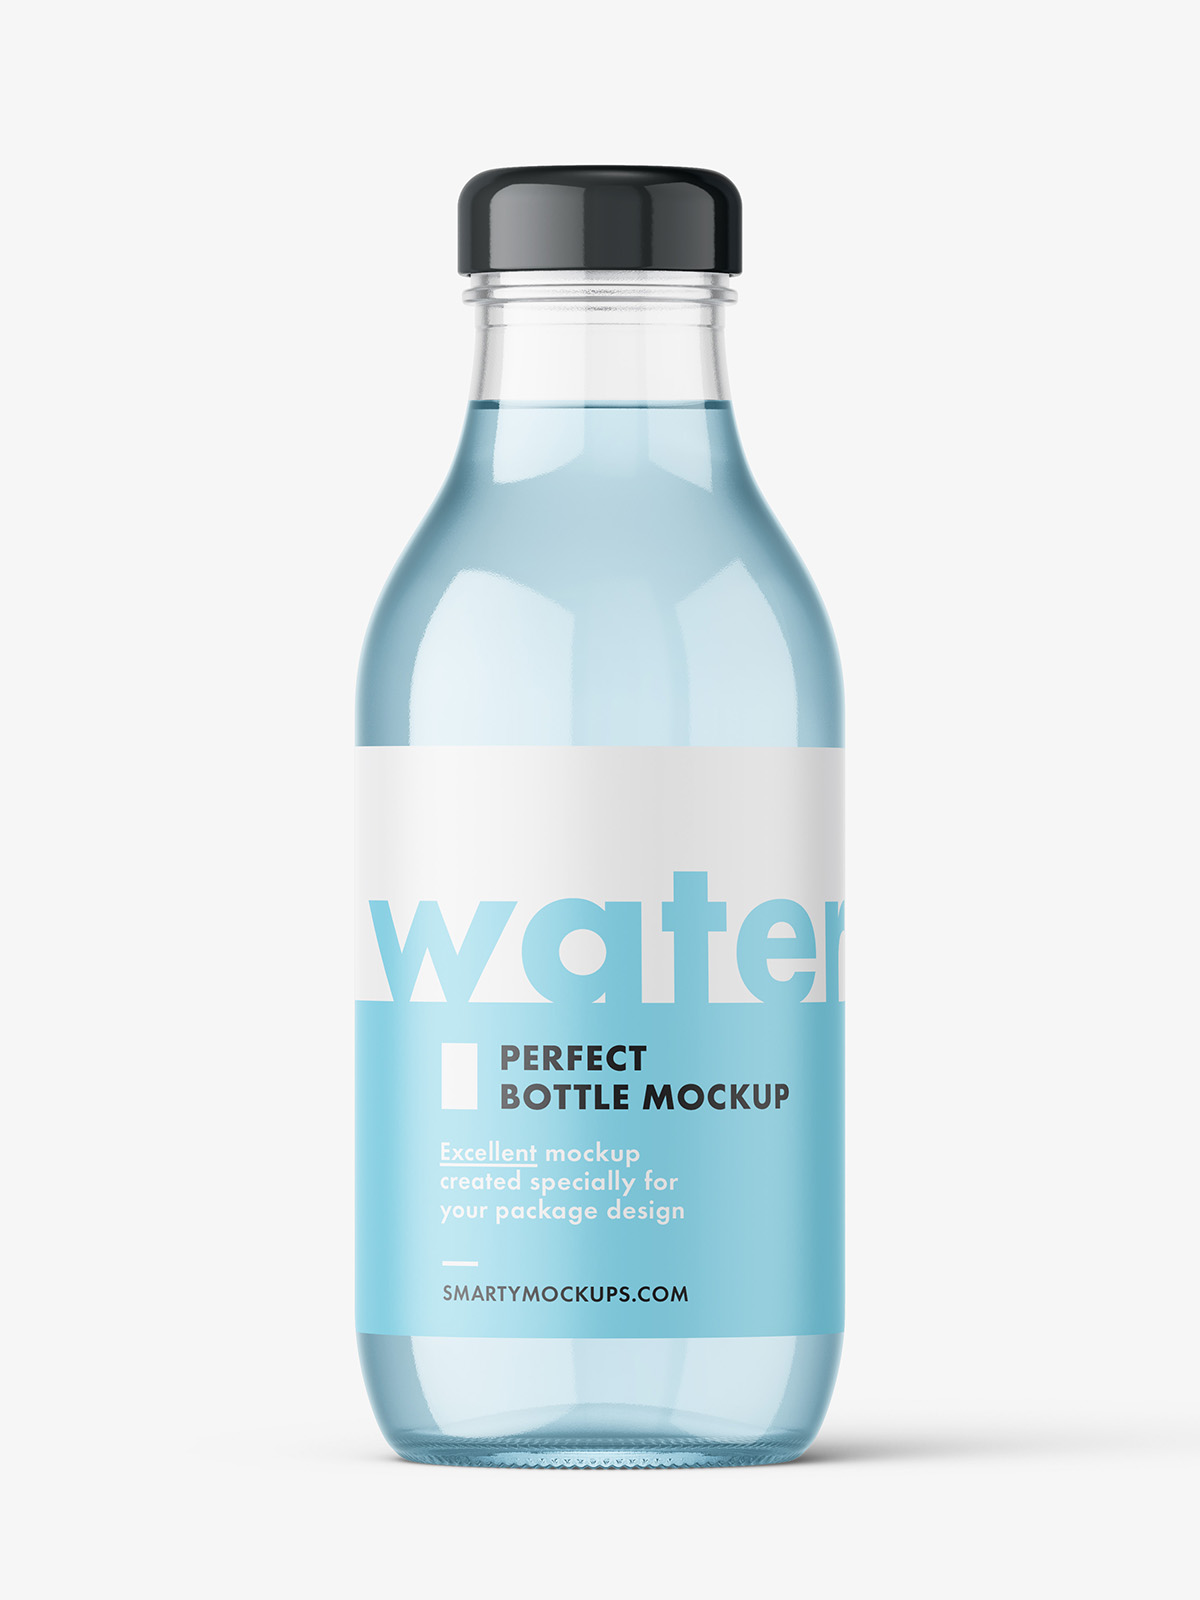 https://smartymockups.com/wp-content/uploads/2021/02/Water_Bottle_Mockup_2.jpg